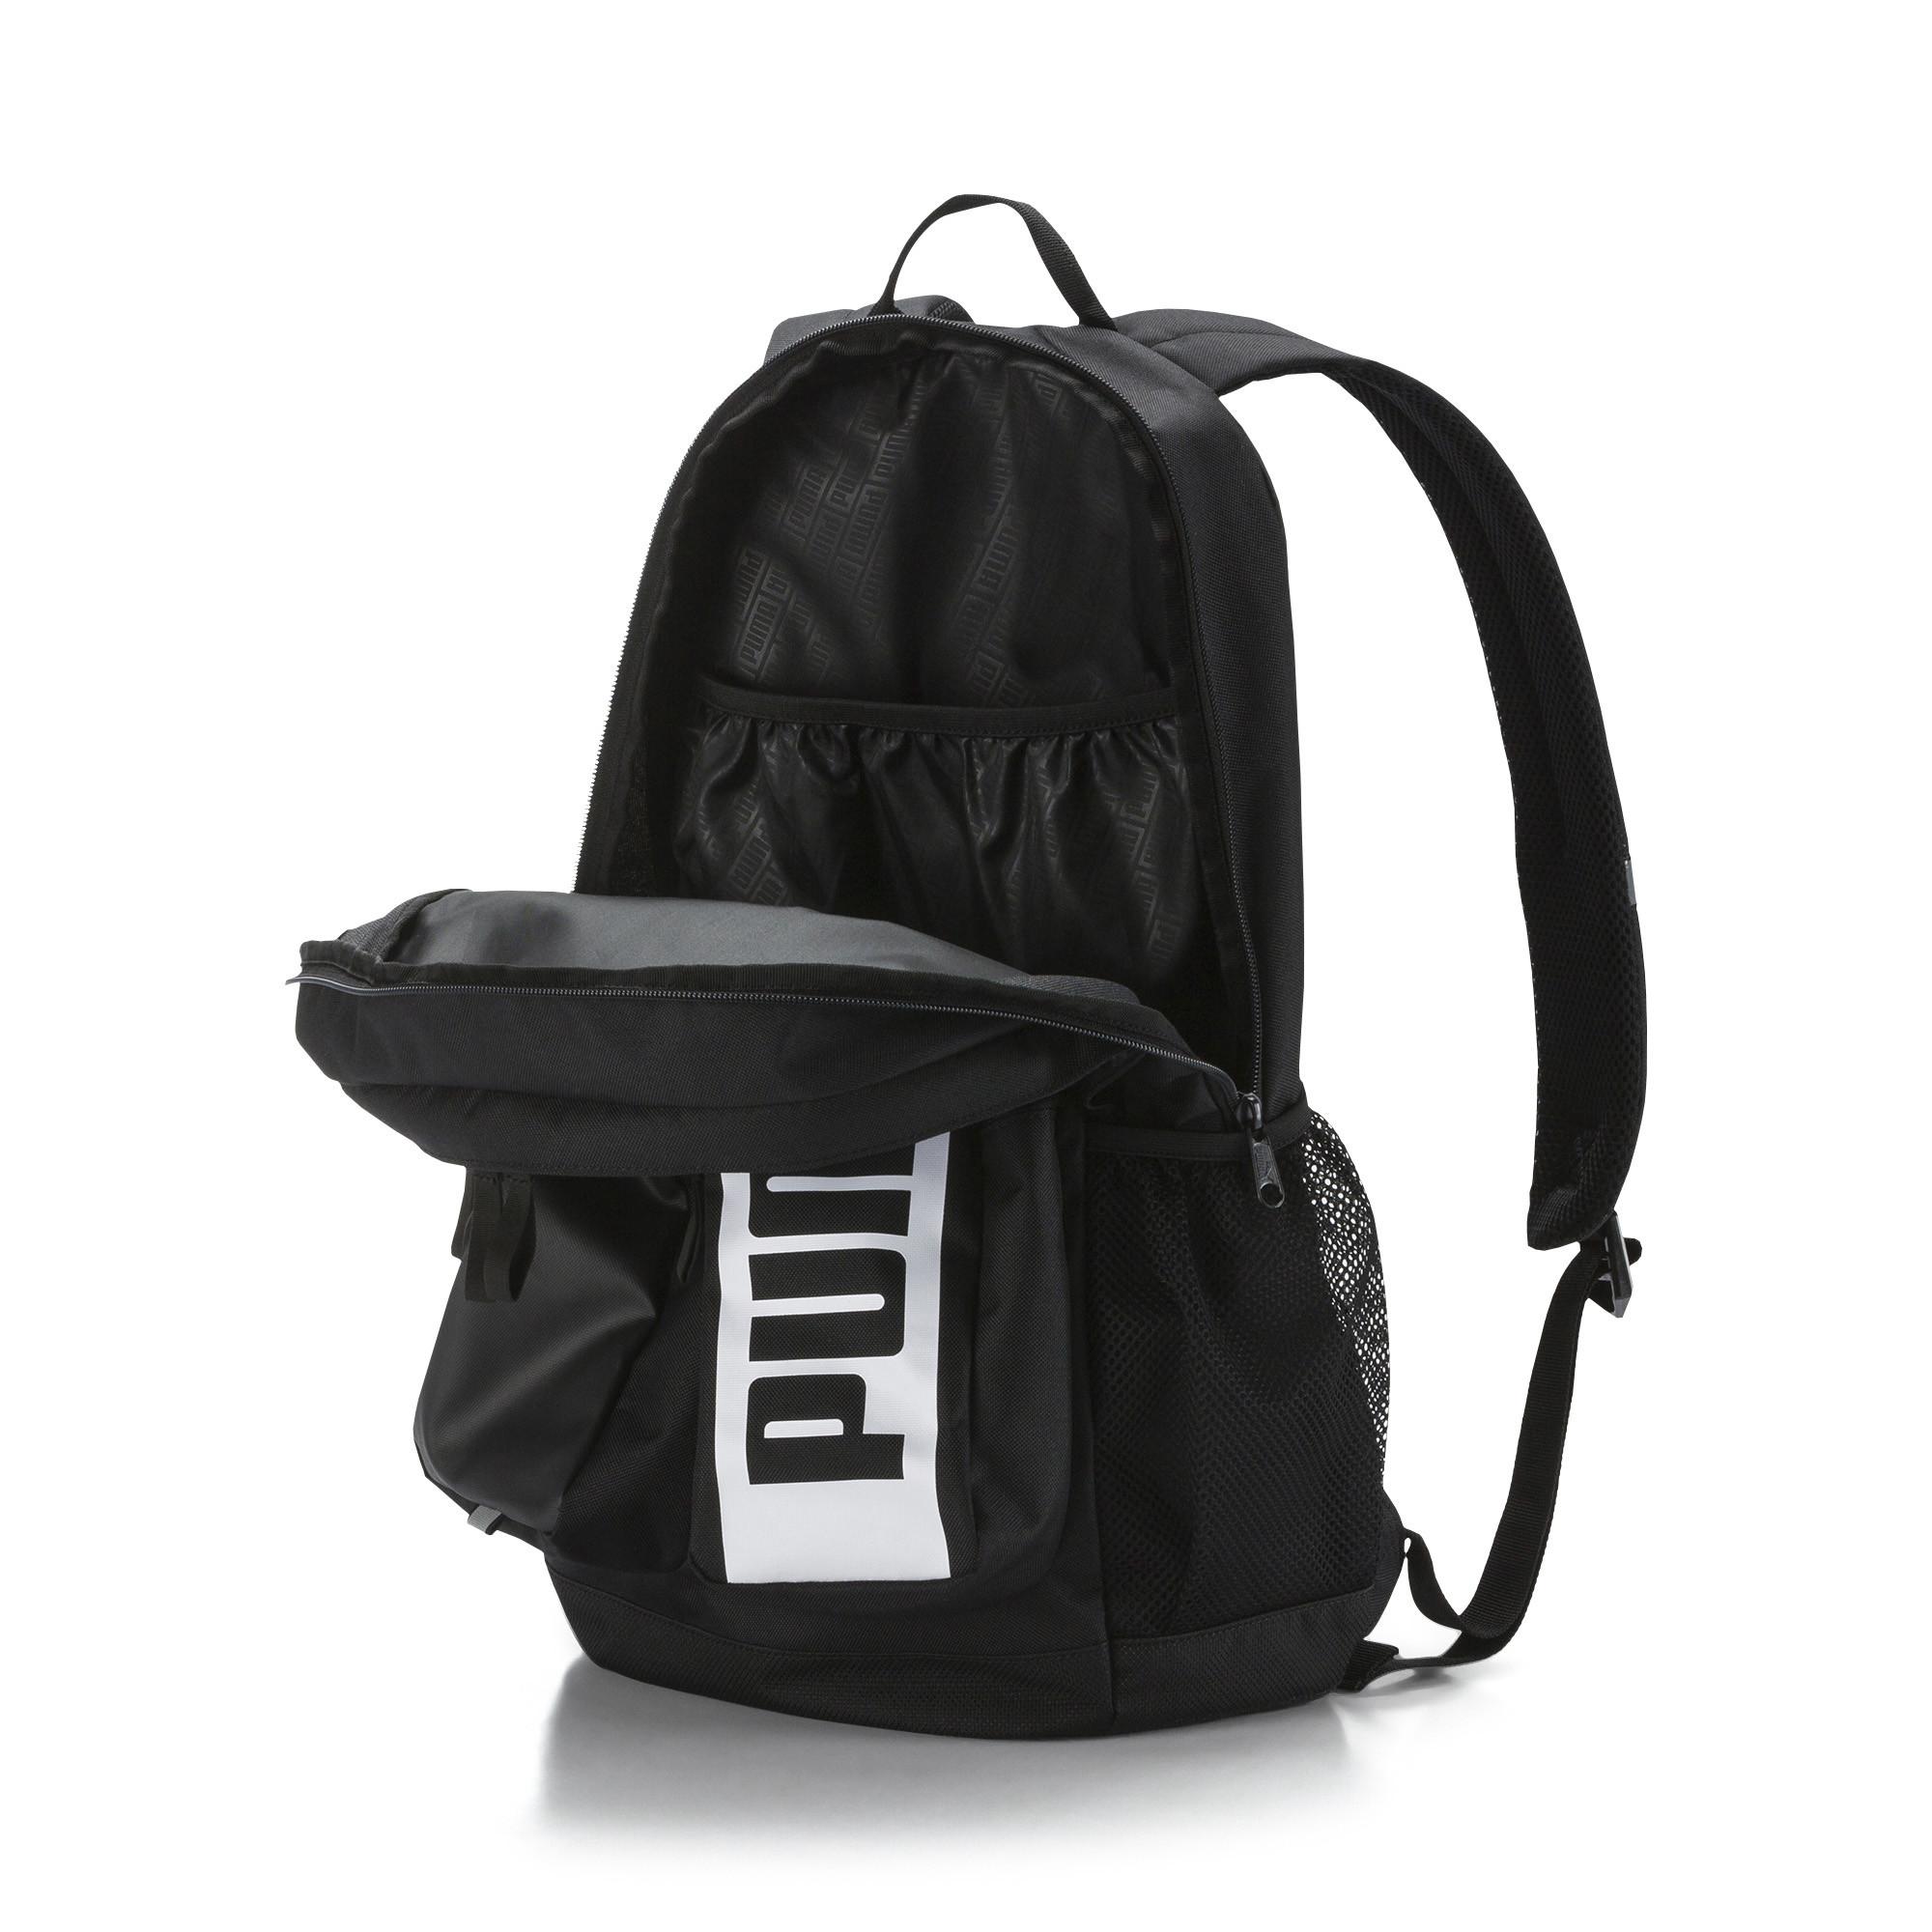 PUMA Deck Ii Backpack in Black for Men - Lyst